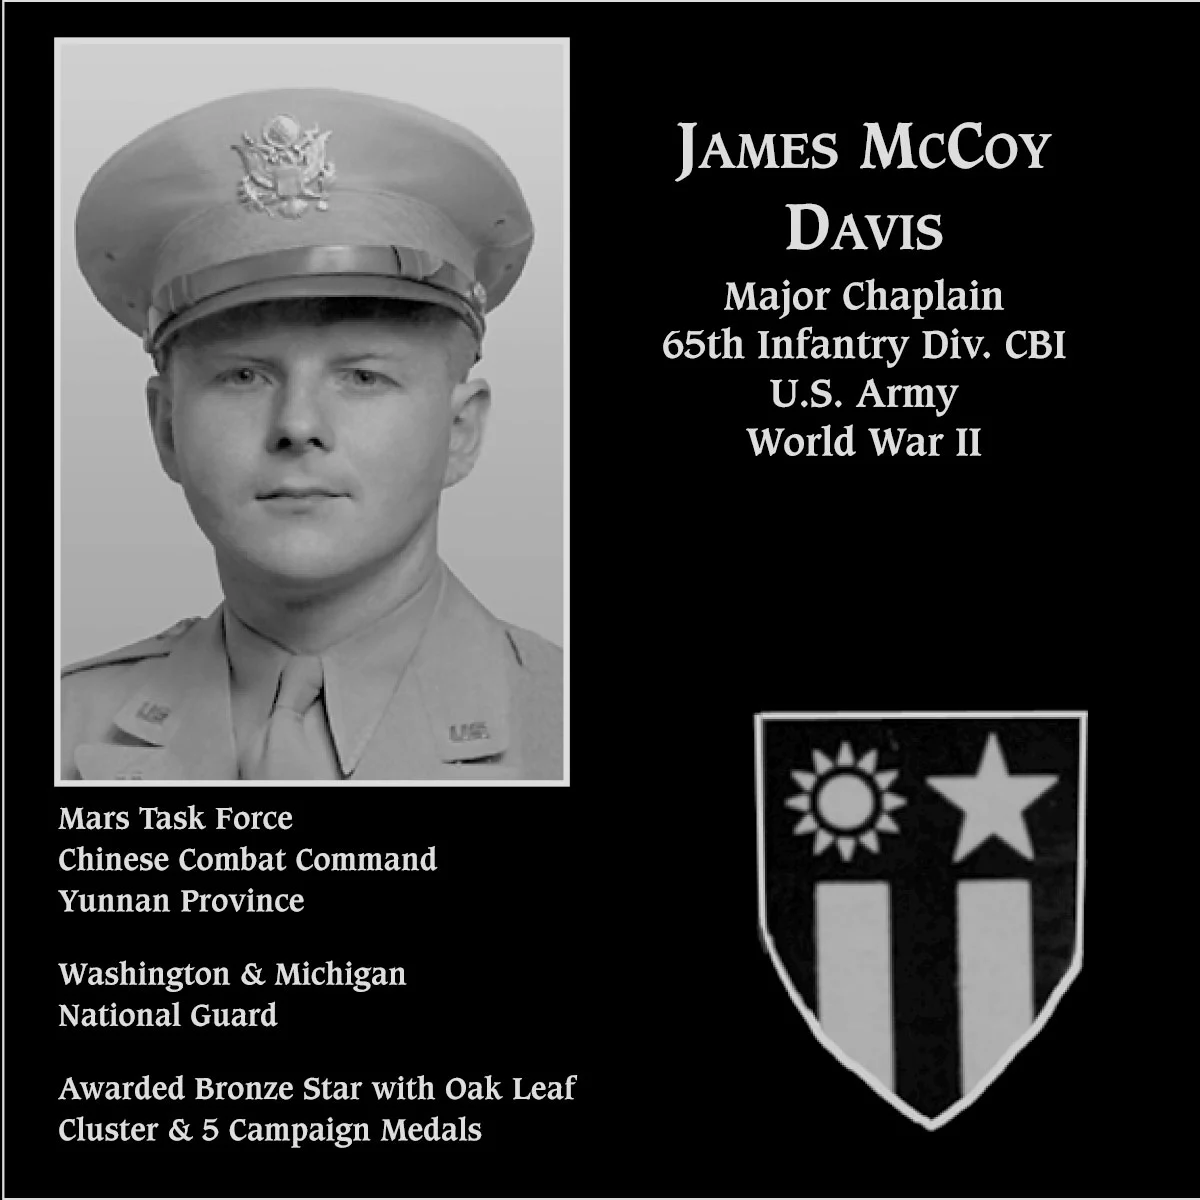 James McCoy Davis